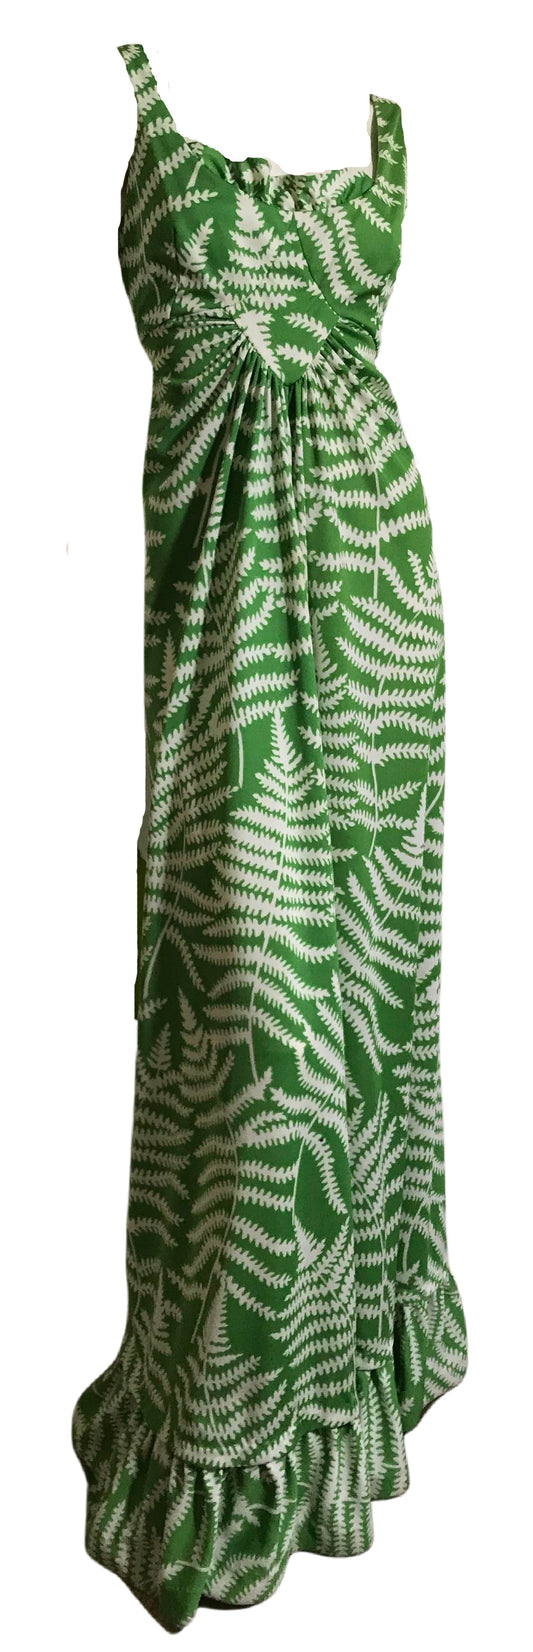 Fern Print Ruffled Neckline Tropical Maxi Dress circa 1970s